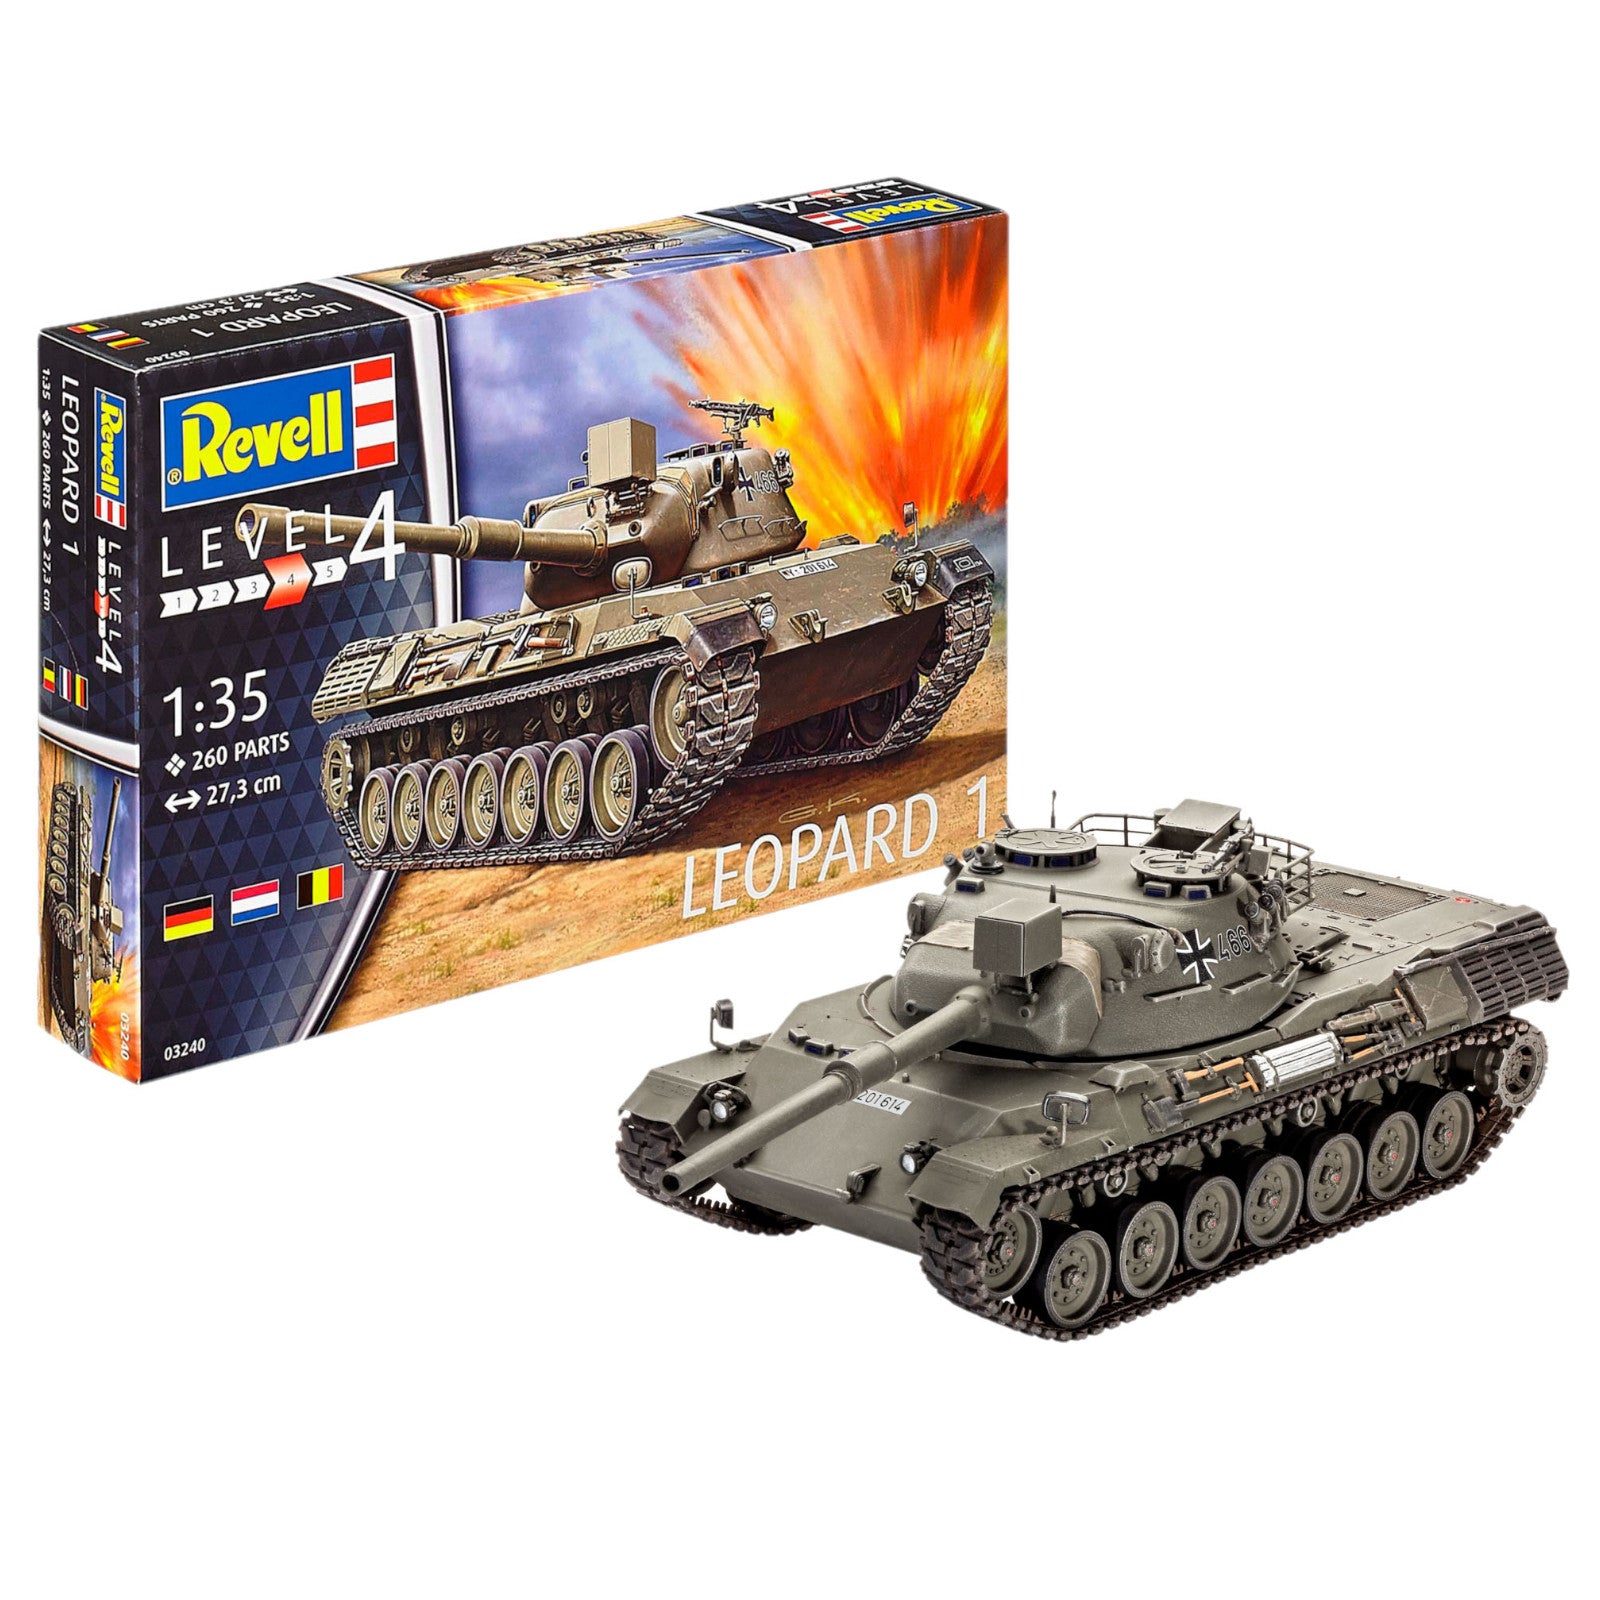 Revell Leopard 1 1:35 Scale Tank Model Kit